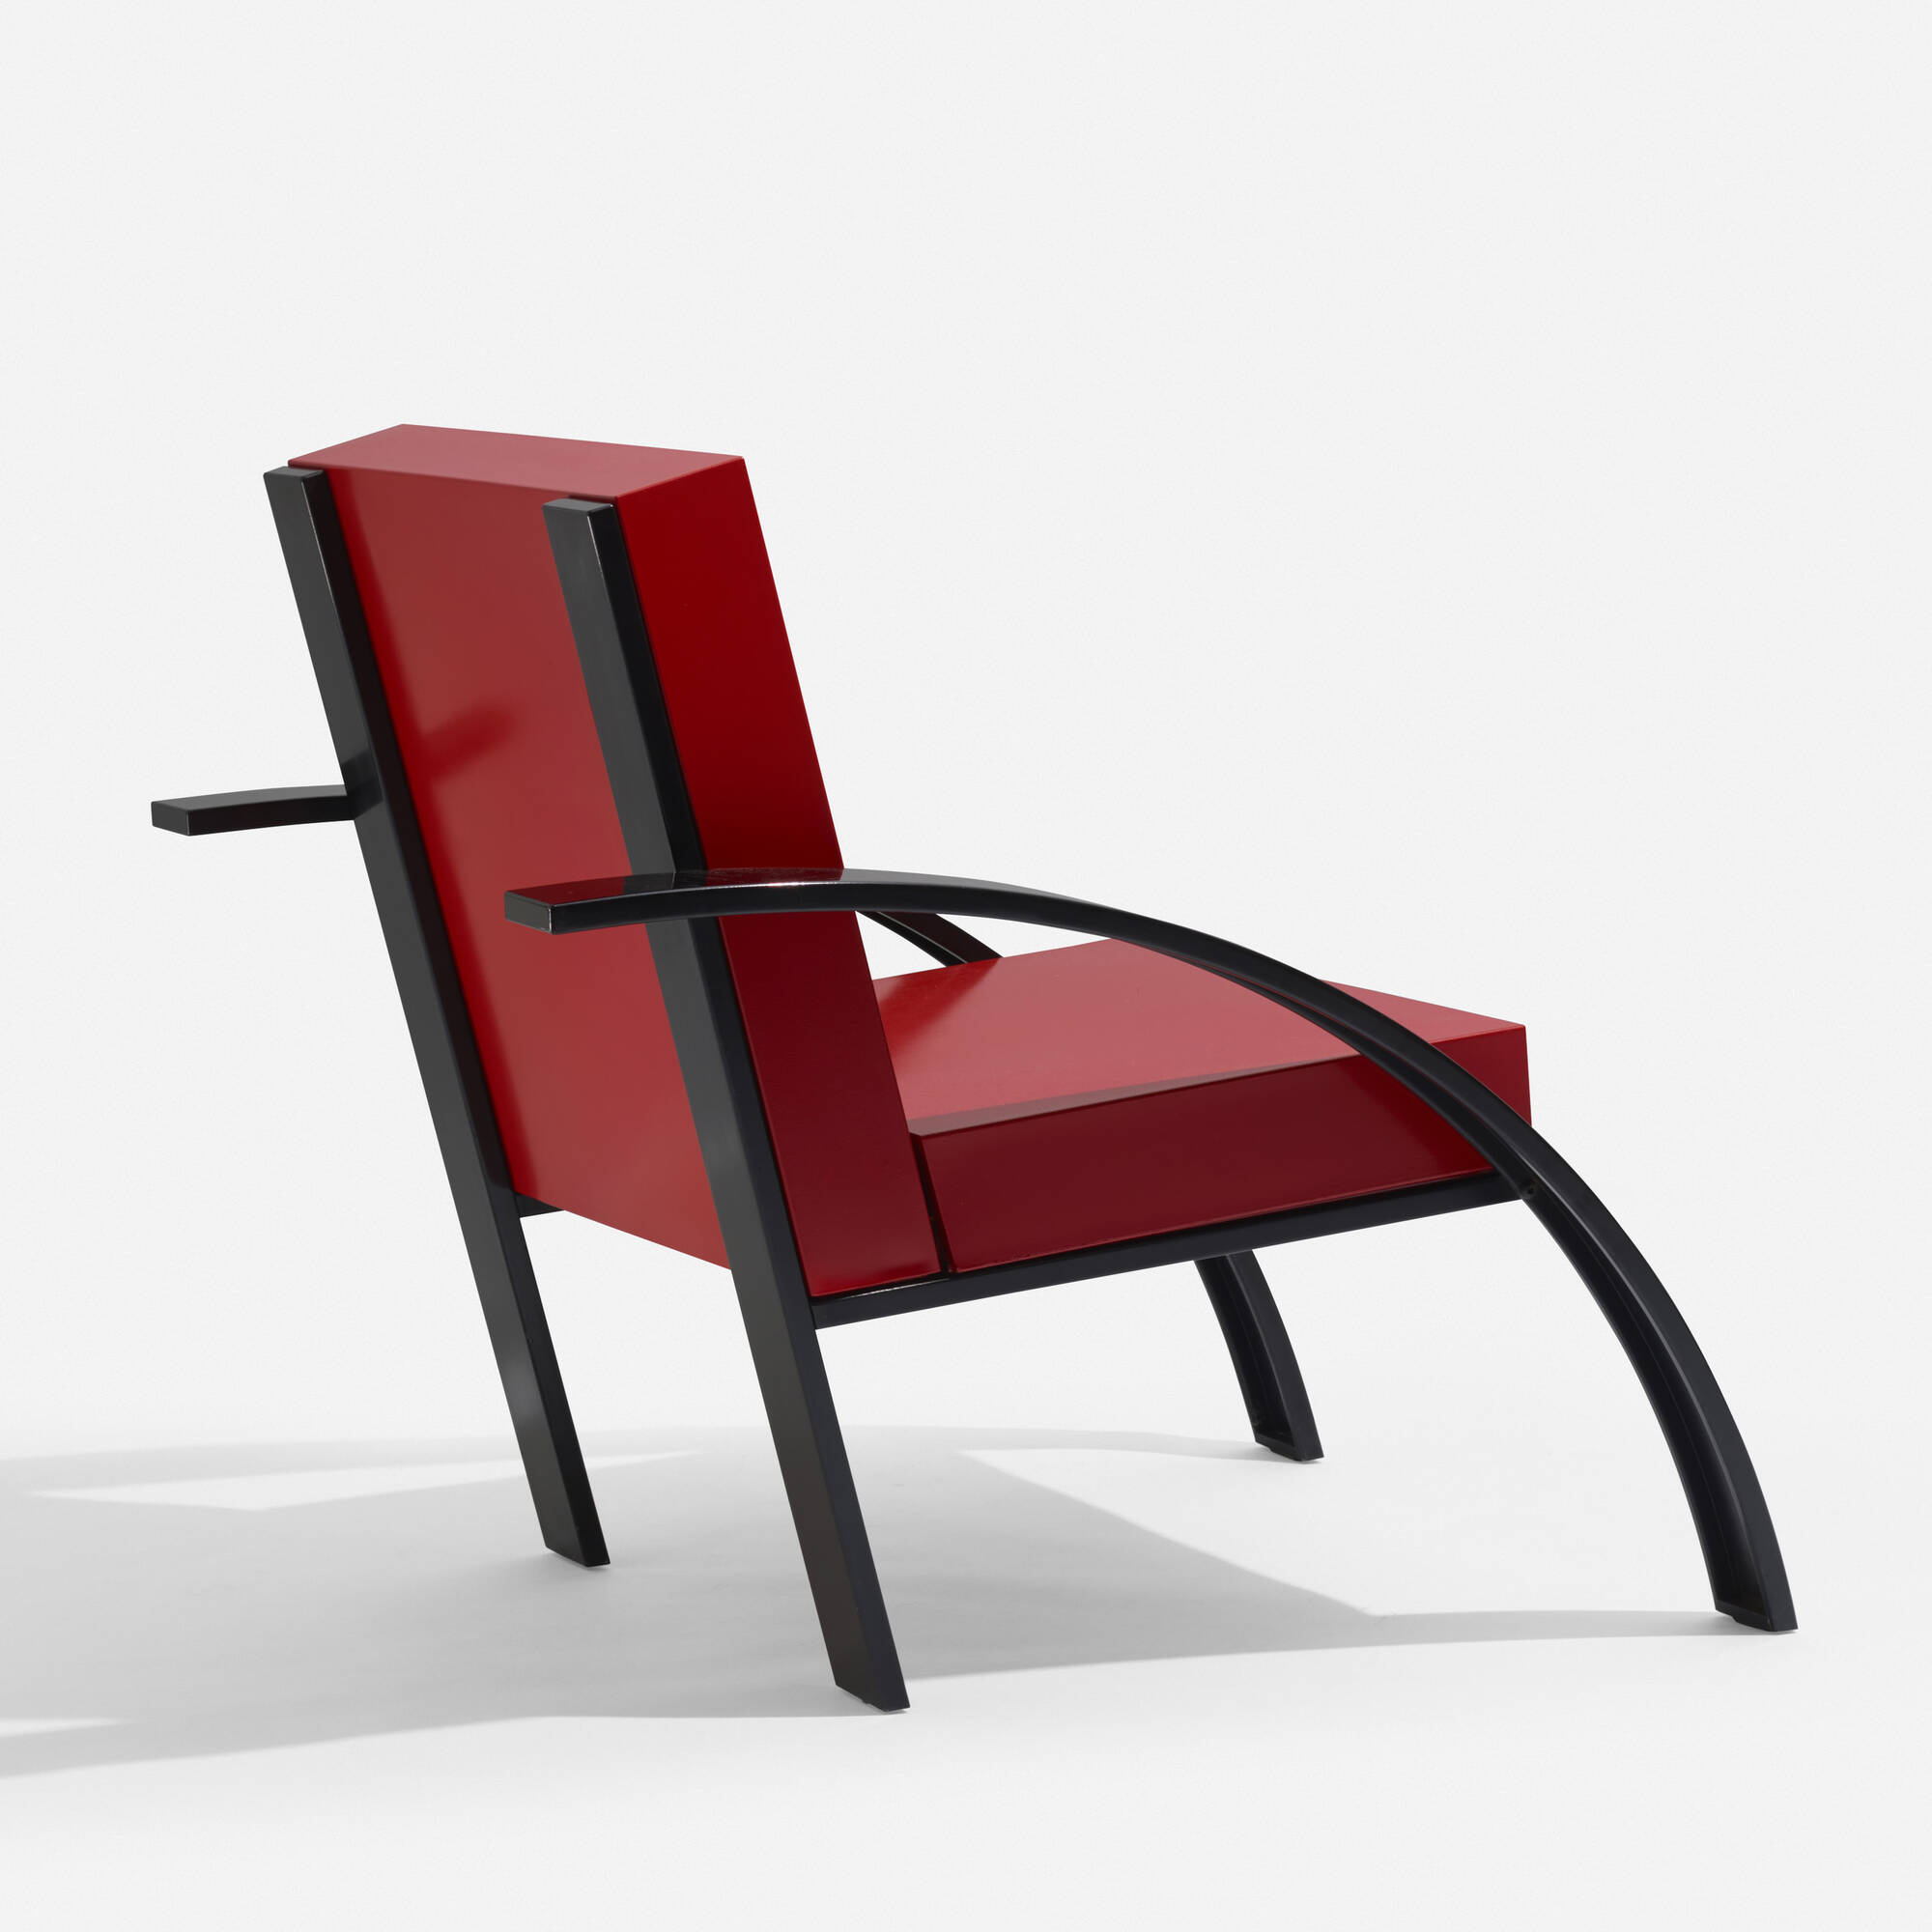 114: ALDO ROSSI, Early production Parigi armchair